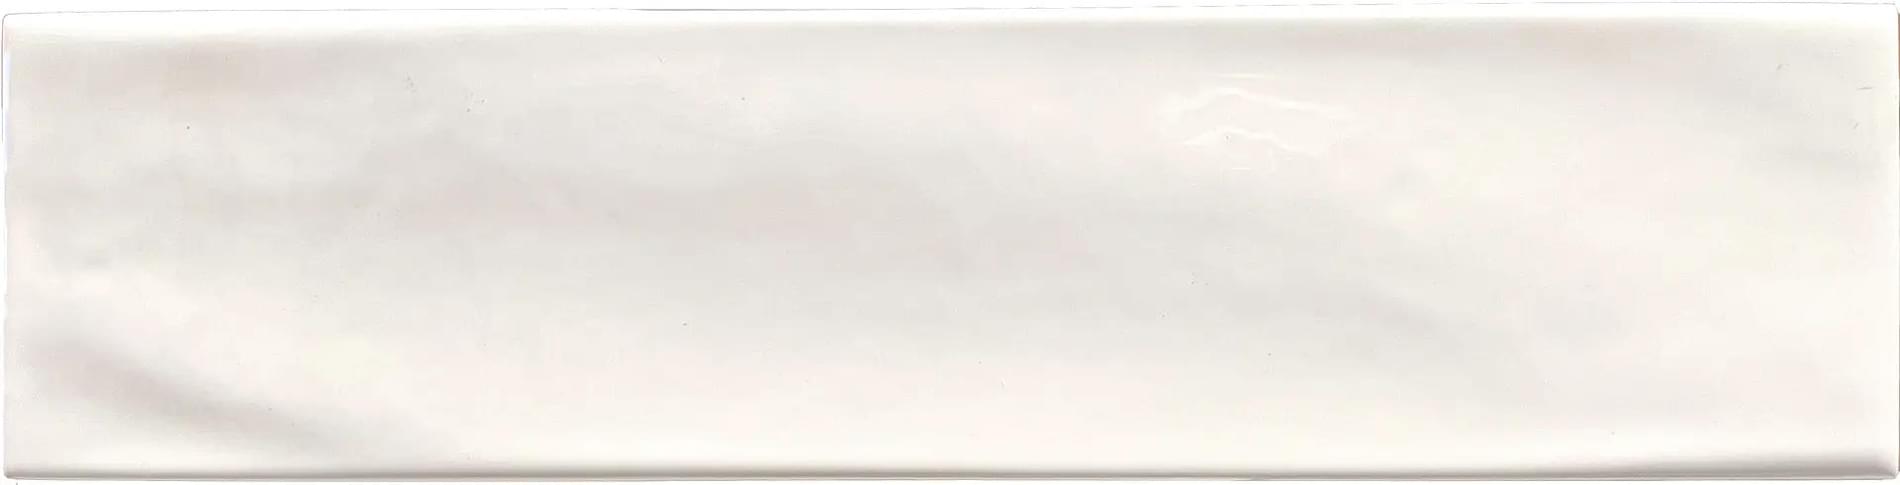 SETTECENTO NEW YORKER BRIGHT WHITE 7.5x30 керамическая плитка в Санкт ...